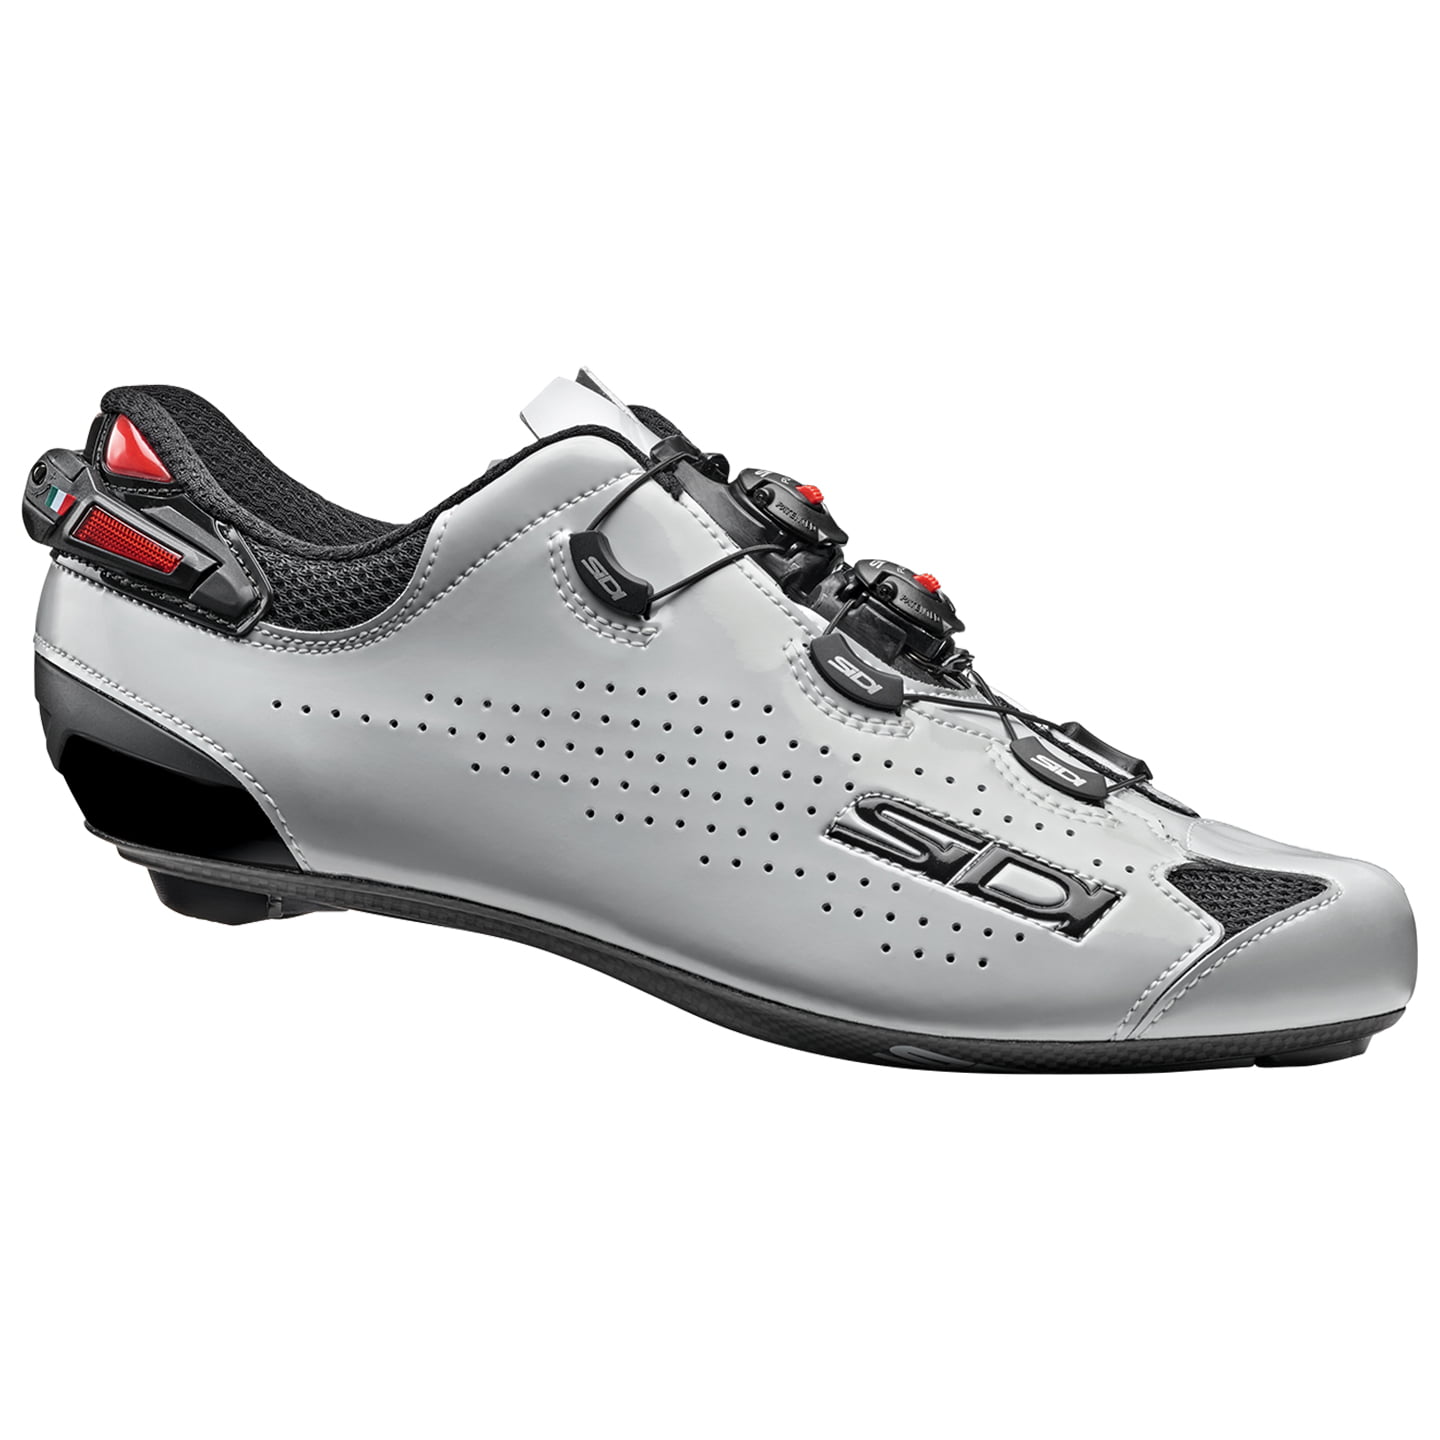 SIDI Shot 2 Road Bike Shoes, for men, size 46, Cycling shoes